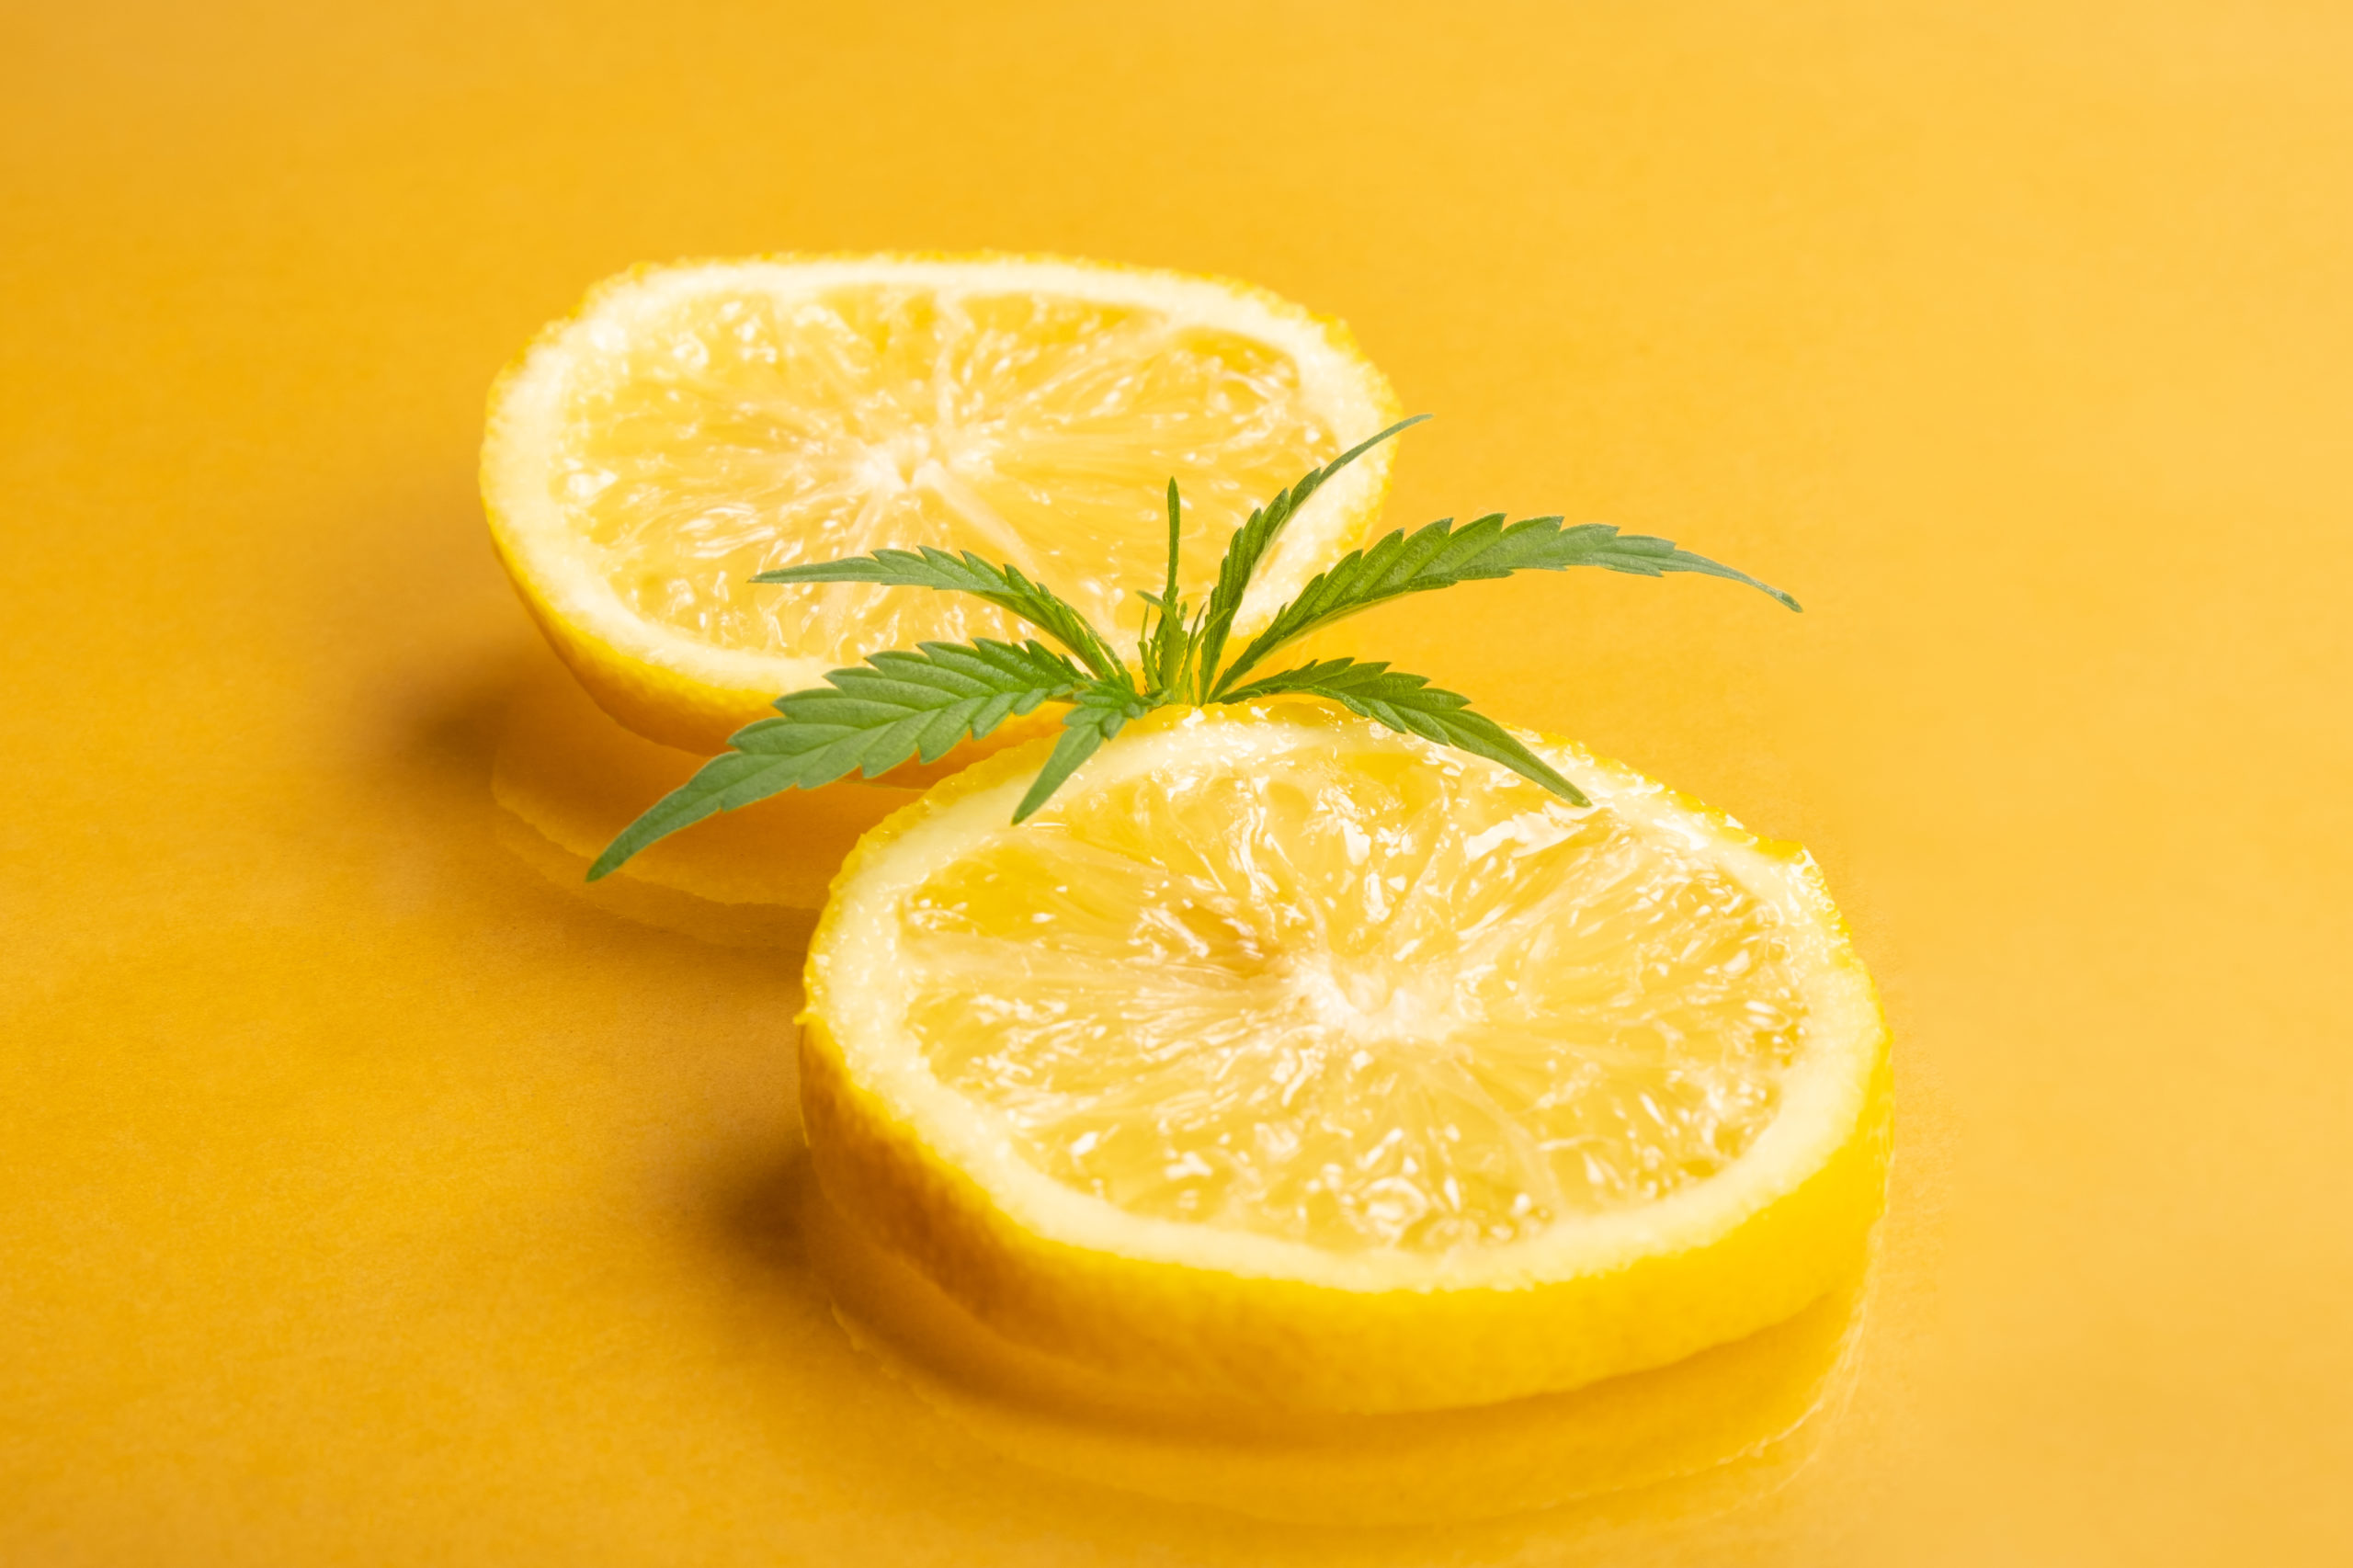 lemon hemp, medical marijuana with citrus flavor and aroma, lemon wedges with marijuana bud on yellow background.